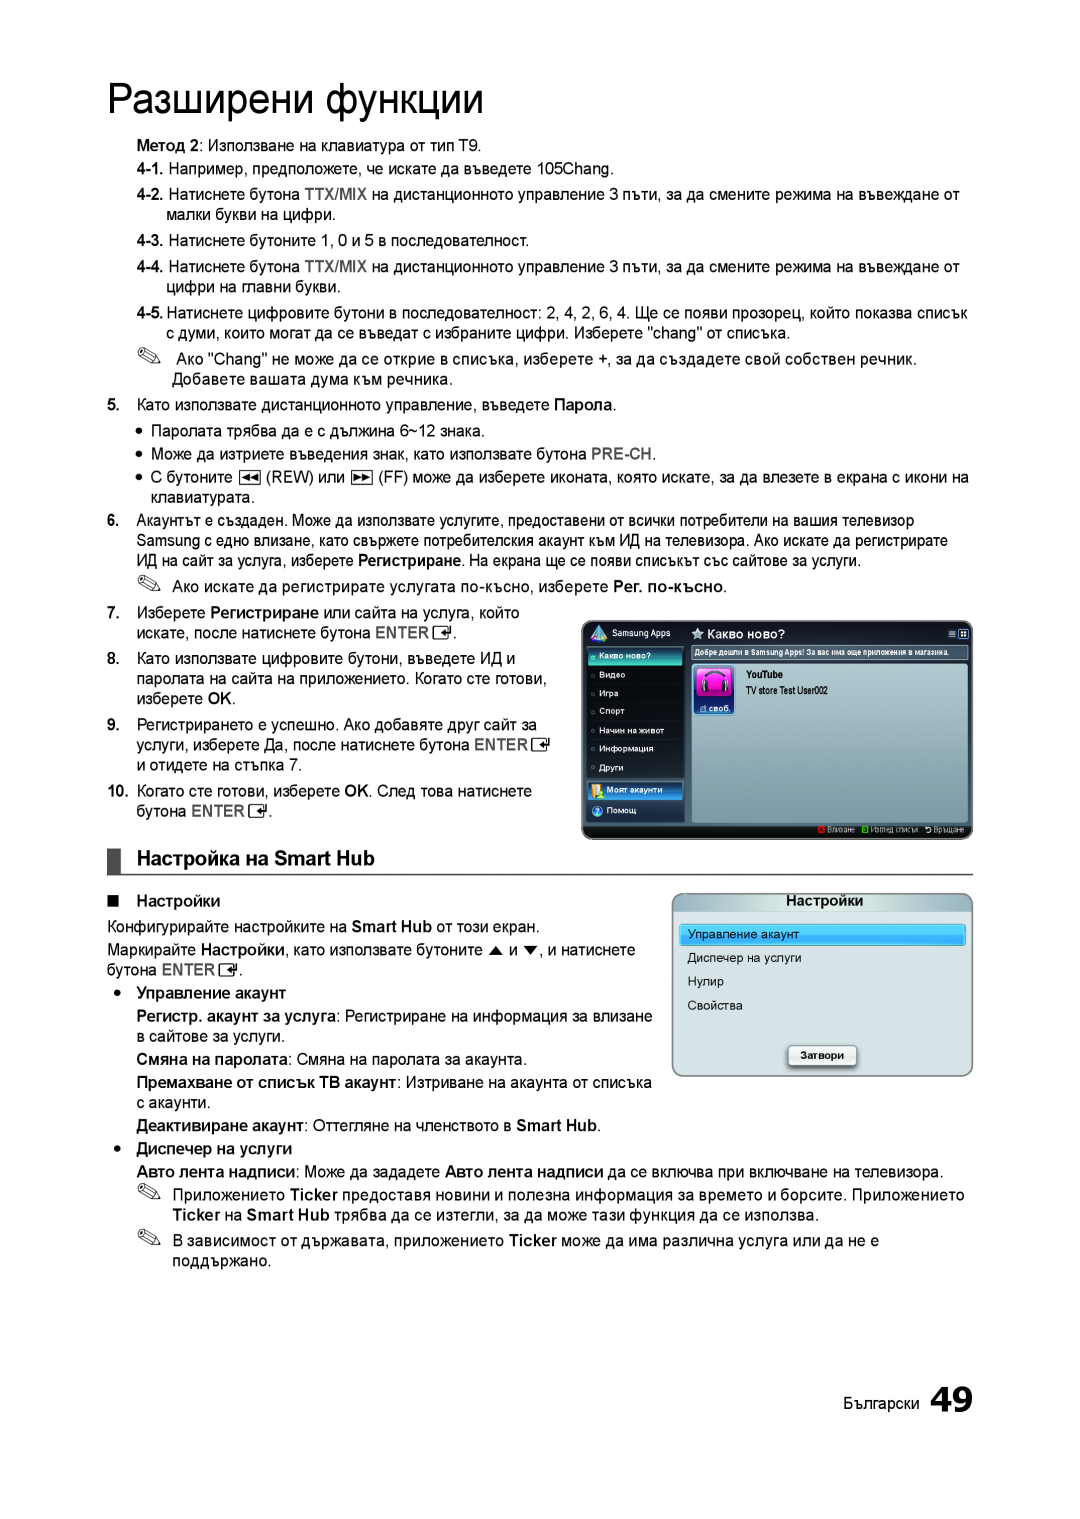 Samsung LT23A750EX/EN manual Настройка на Smart Hub, Разширени функции, Настройки, Управление акаунт, Диспечер на услуги 